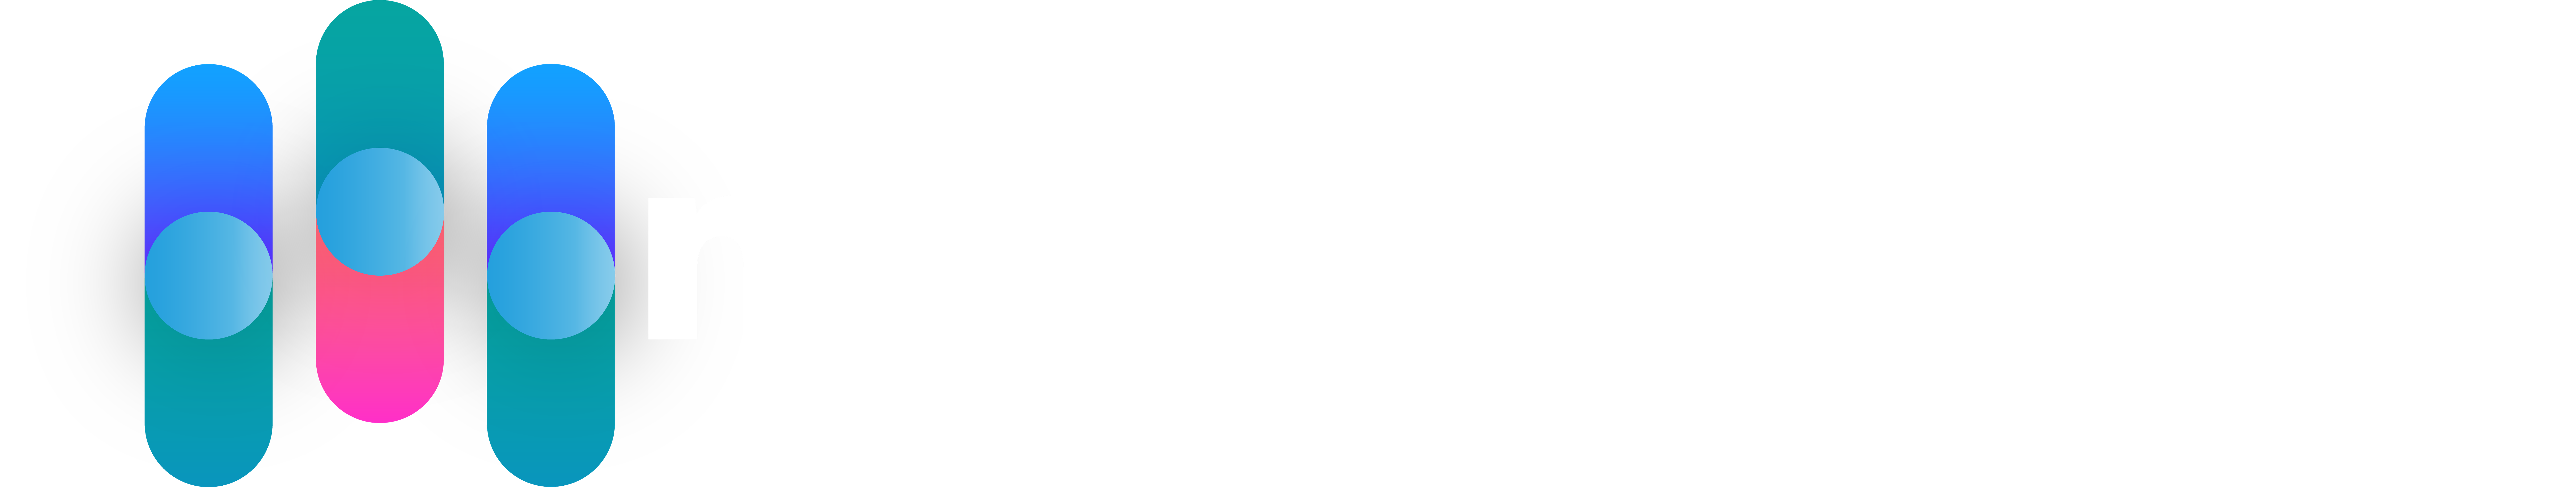 MoneyGossips Logo 2021